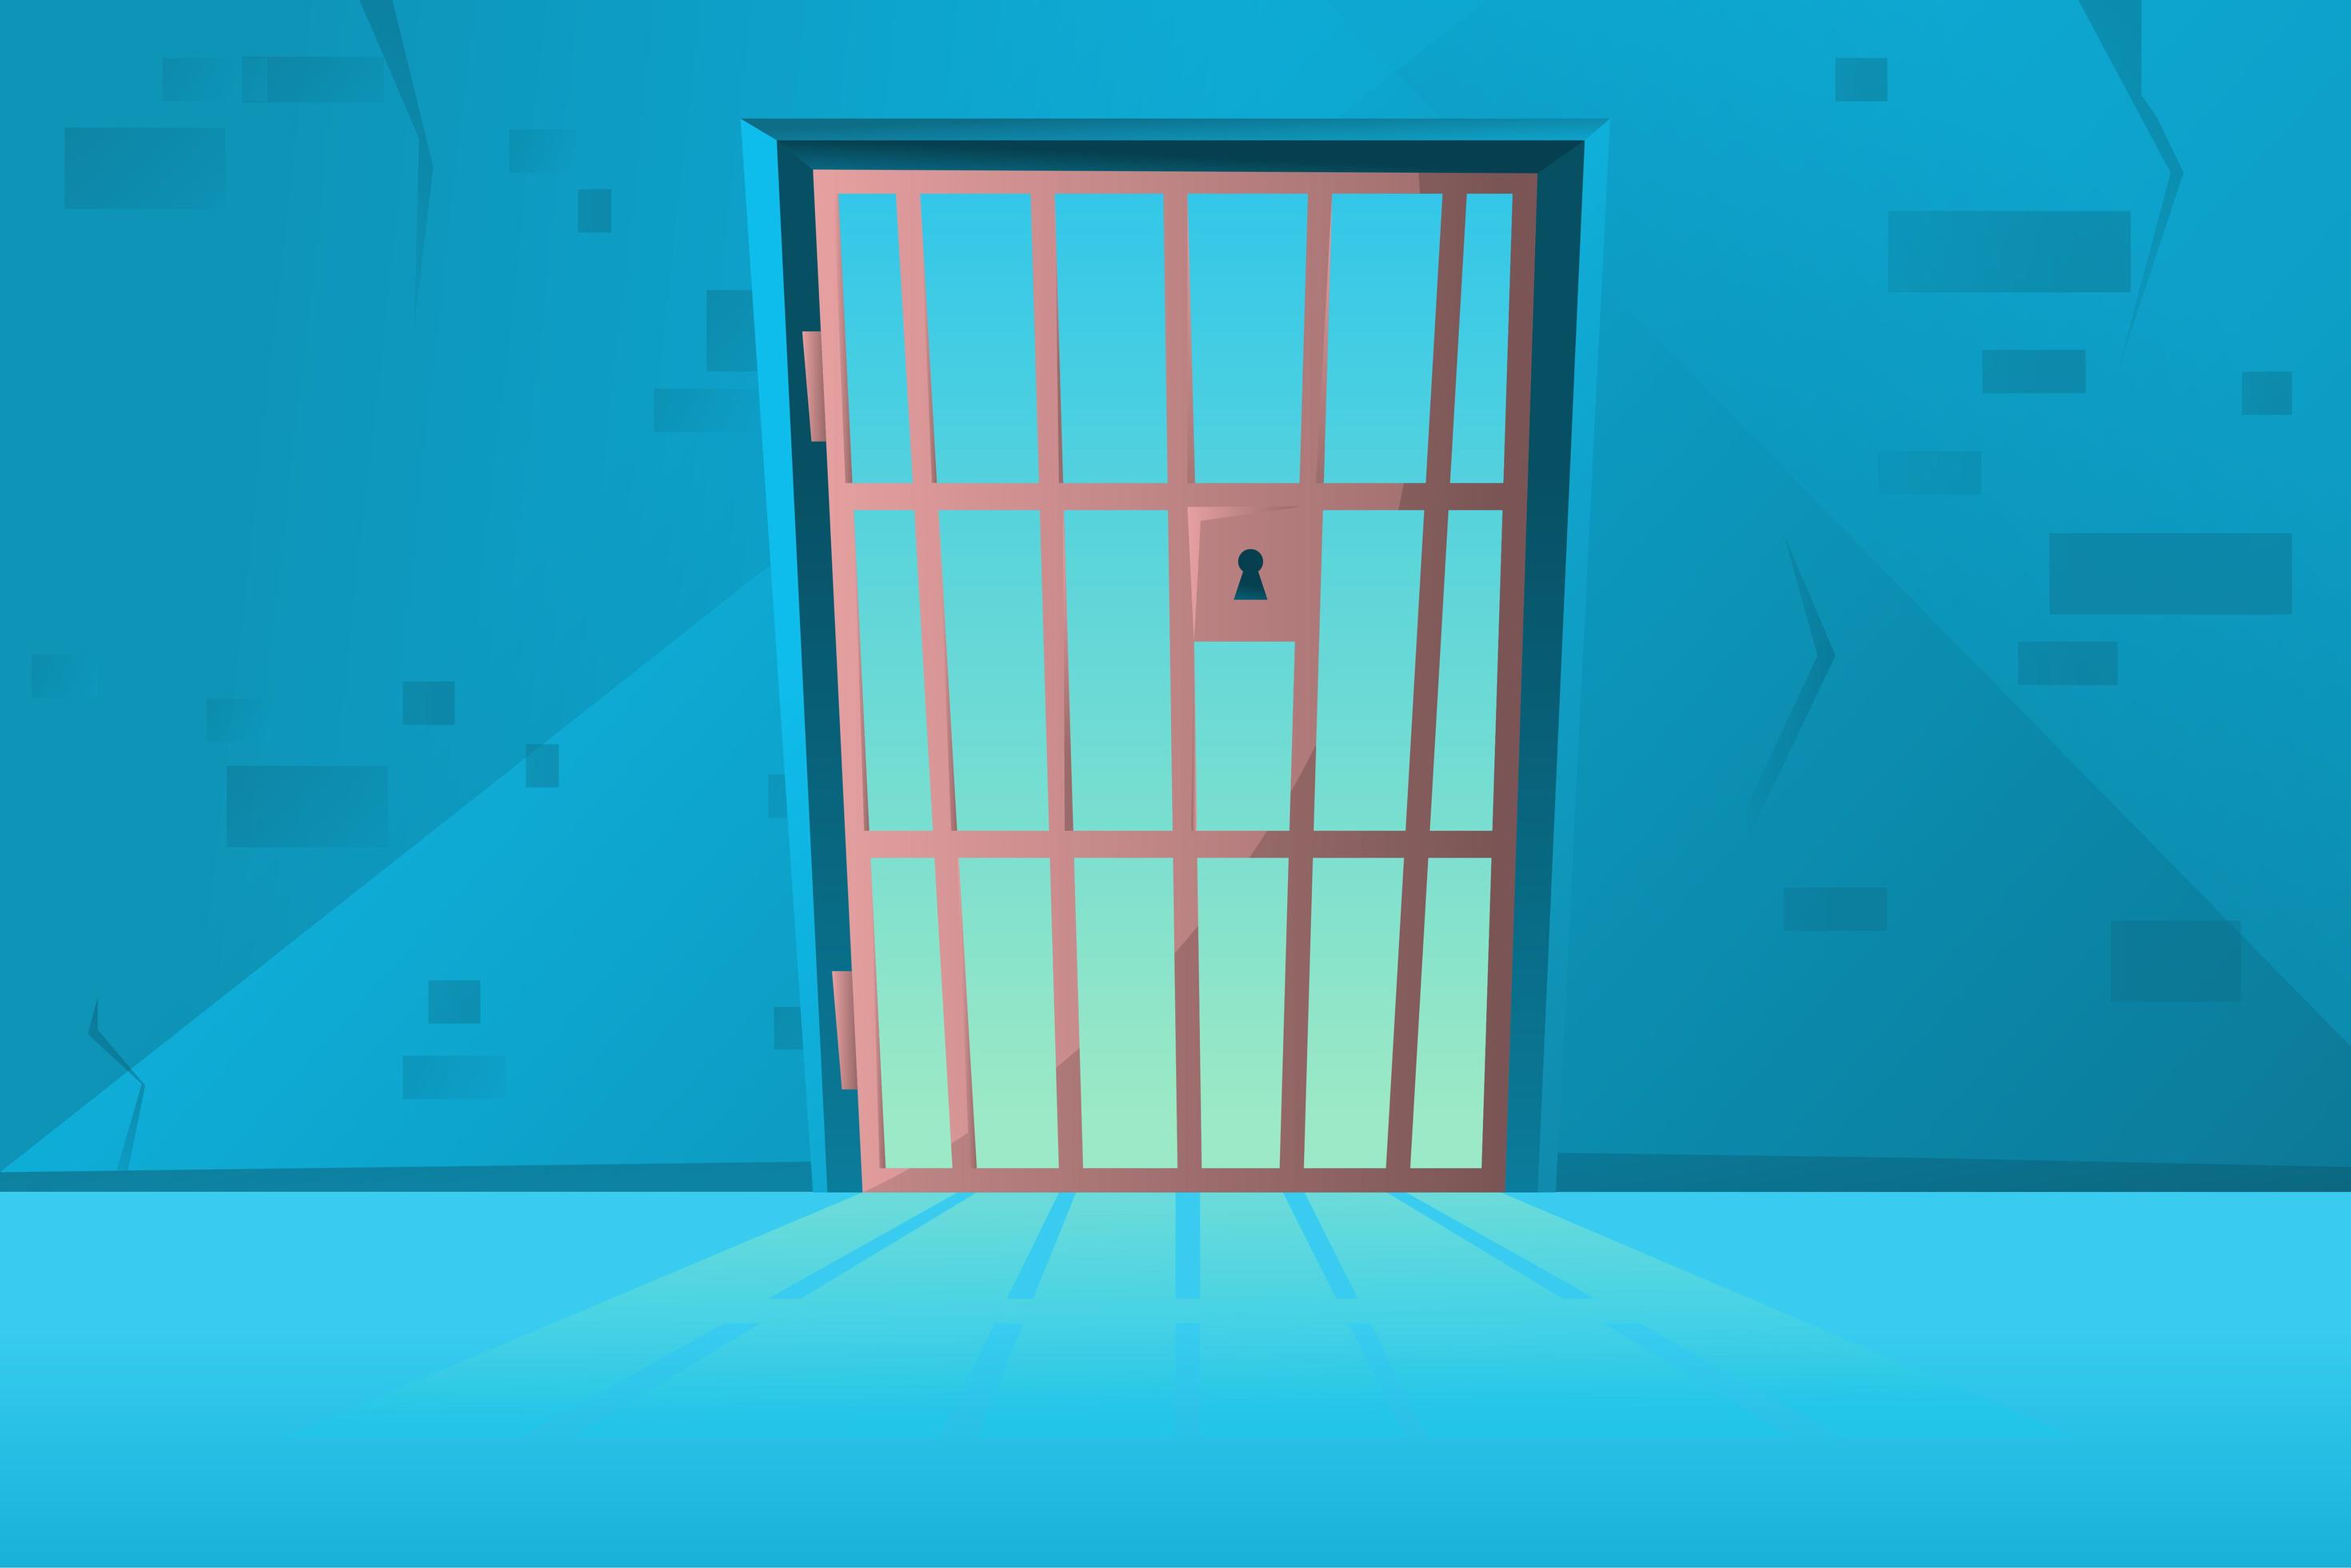 Grid door in cartoon style. Corridor. Hallway Prison cell interior with